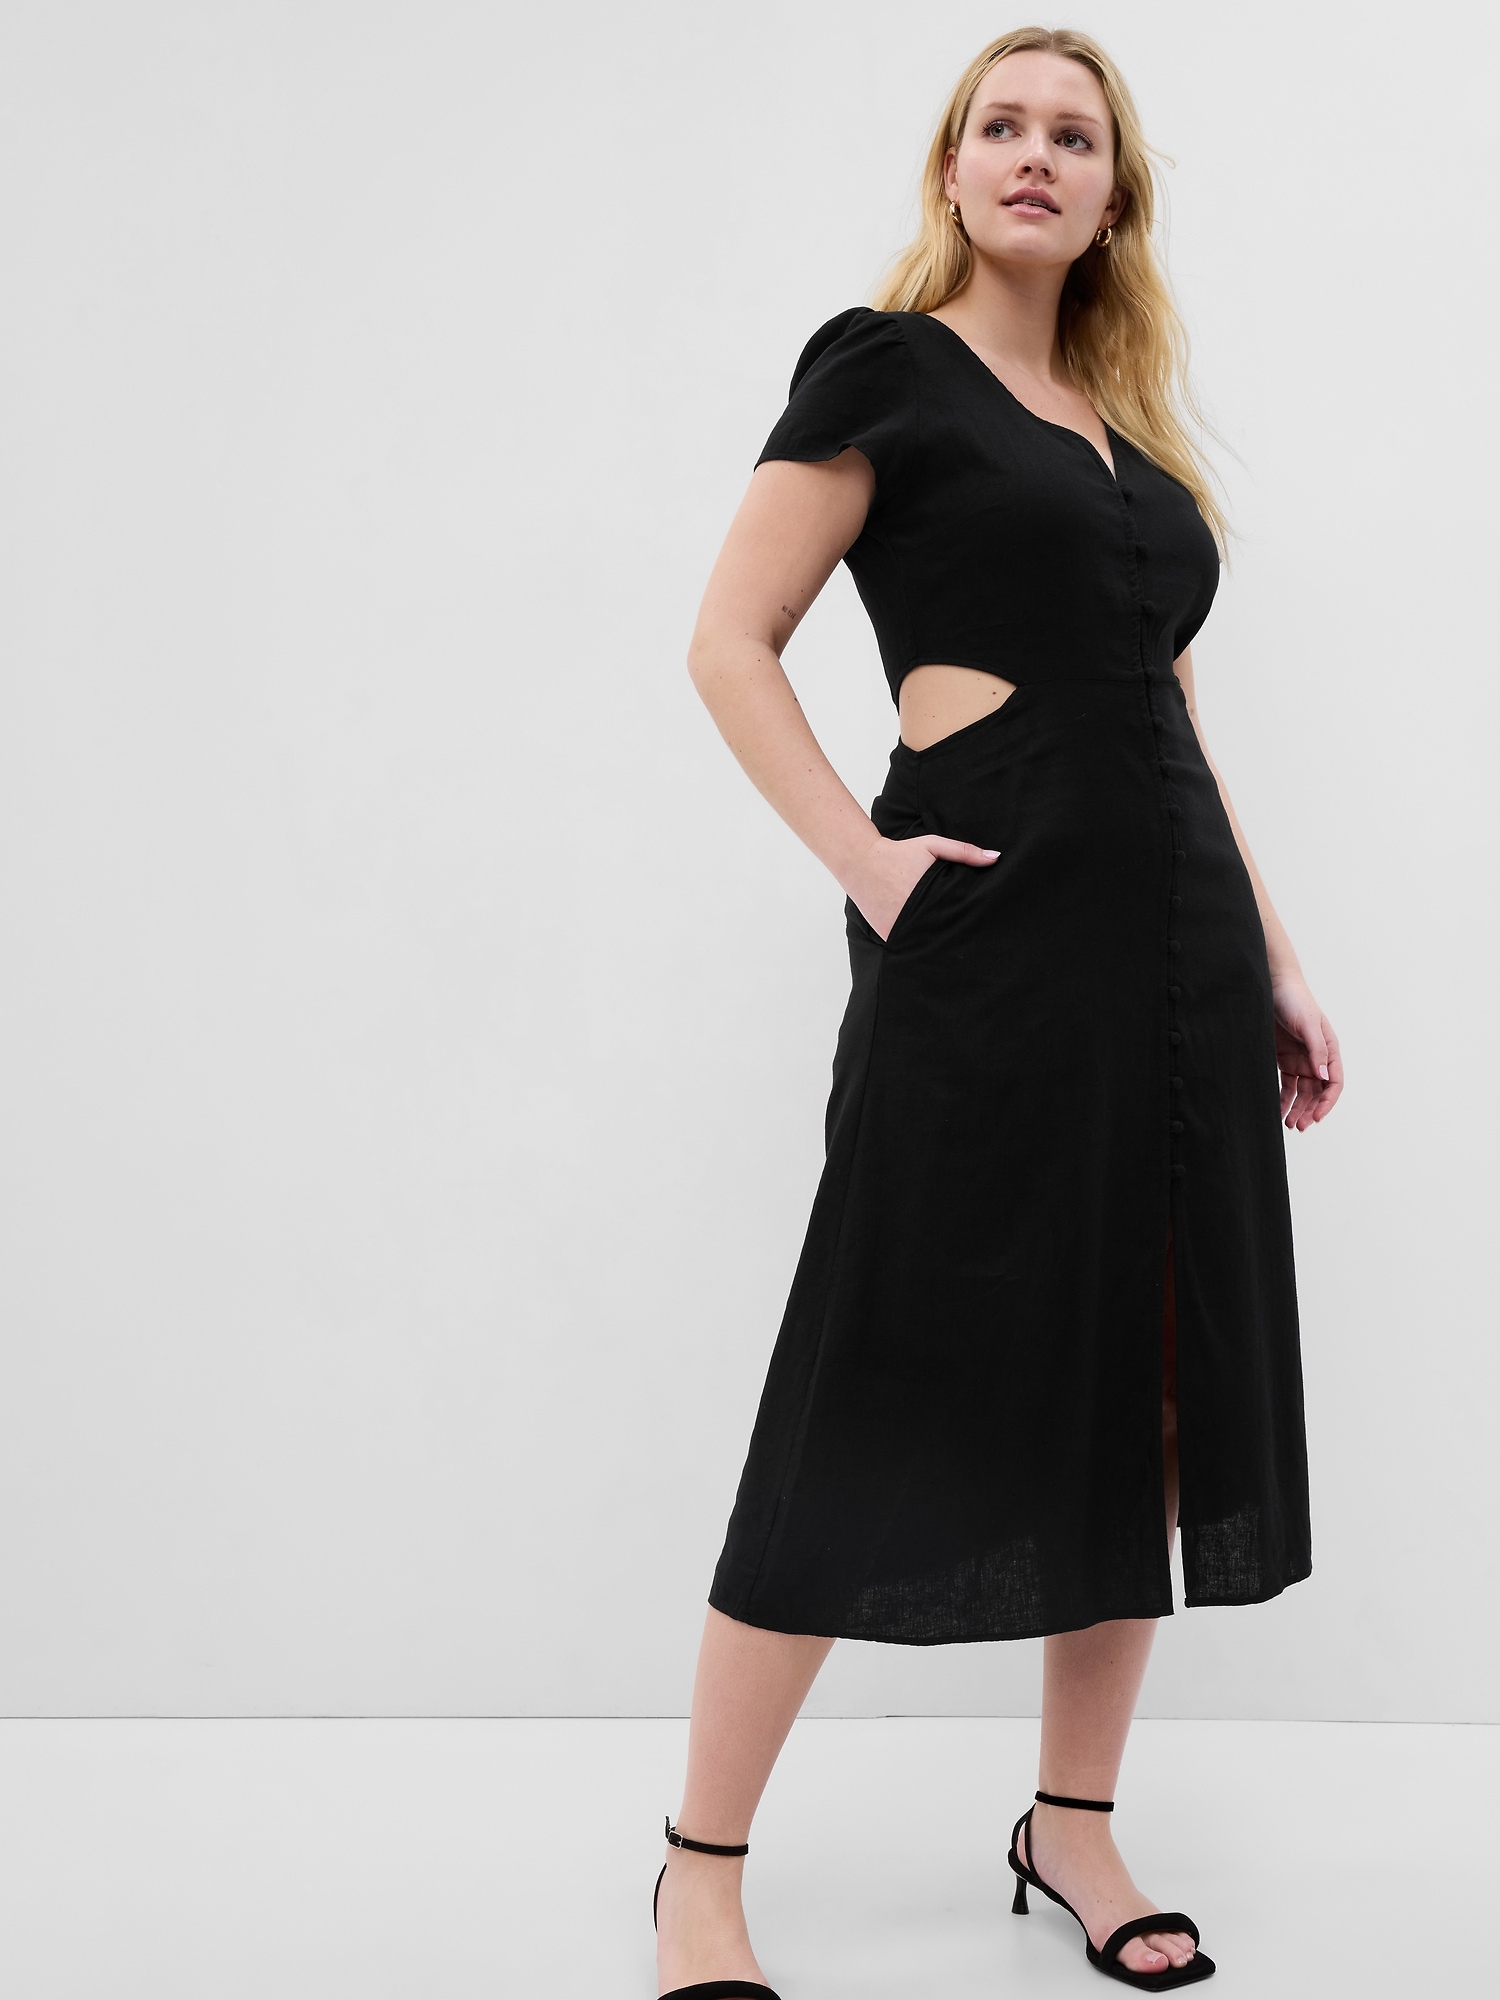 Fringe-trimmed Bouclé Dress curated on LTK